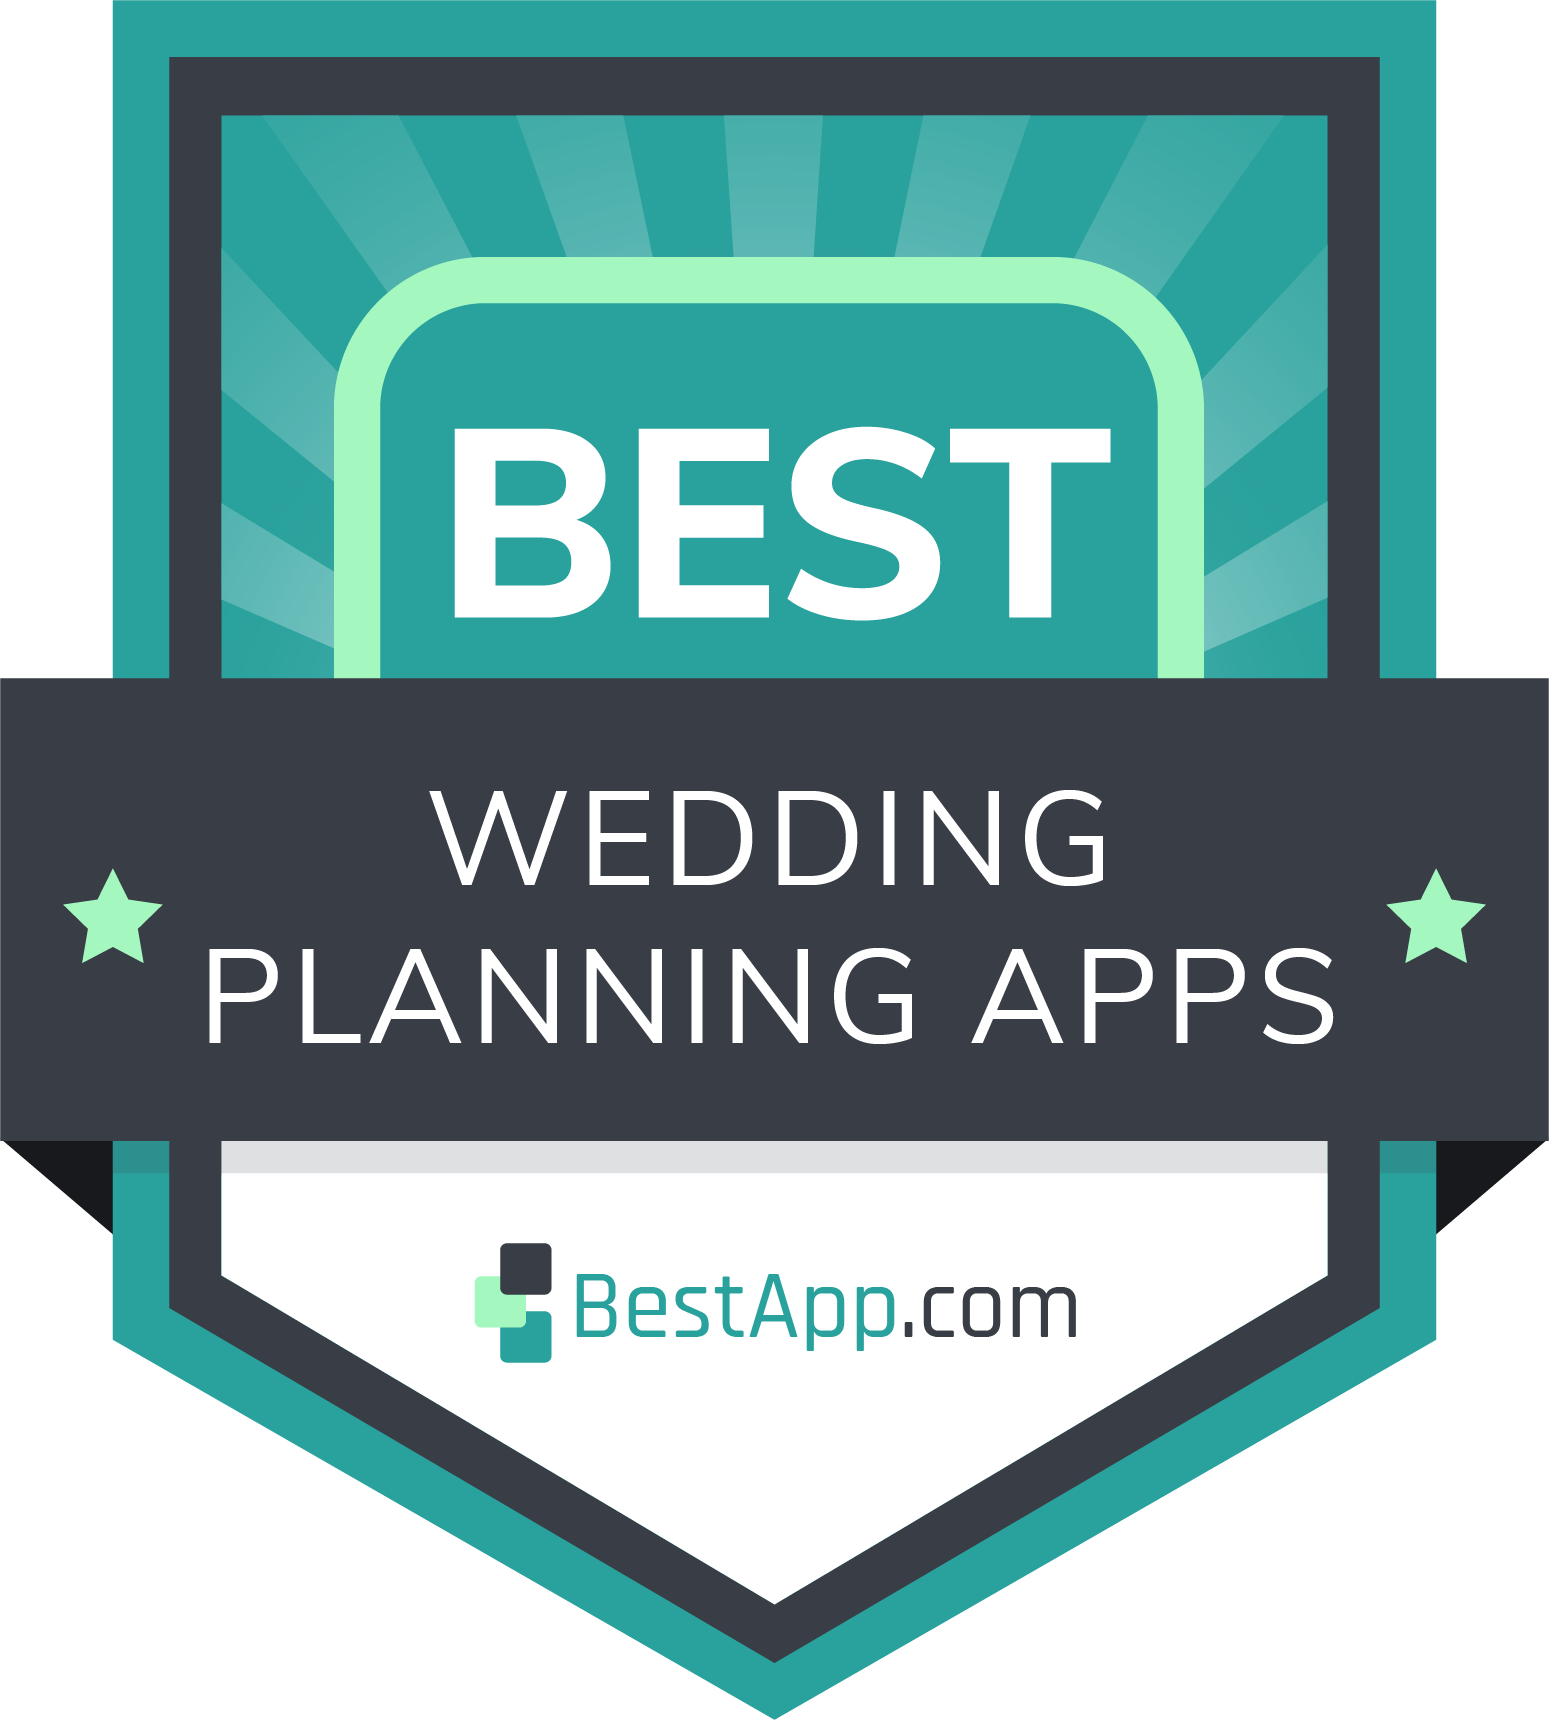 Best Wedding Planning Apps Badge